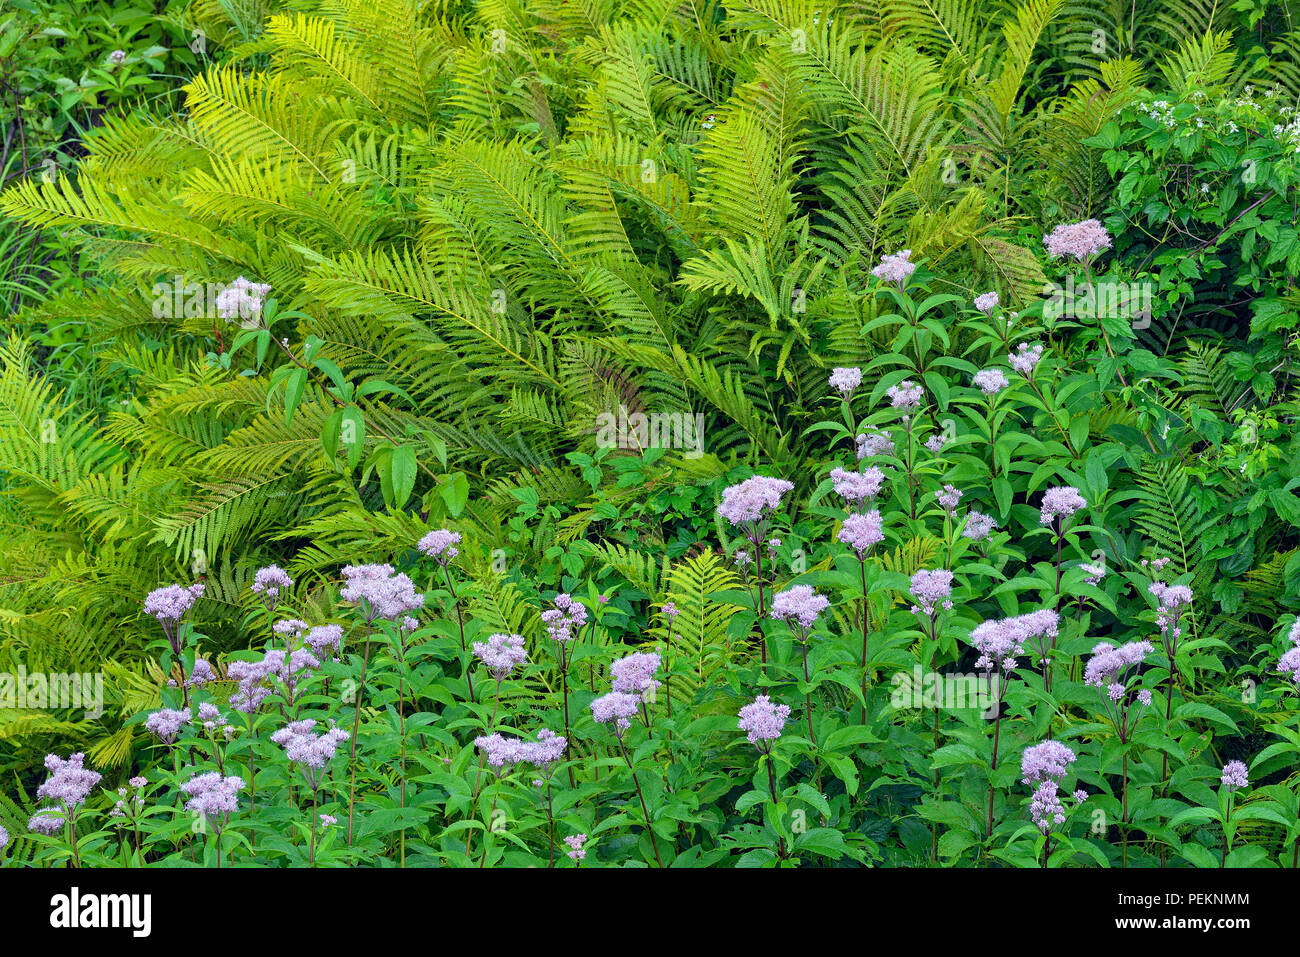 Flowering Joe-pye-weed (Eupatorium maculatum) and Cinnamon fern (Osmundastrum cinnamomea), Greater Sudbury, Ontario, Canada Stock Photo